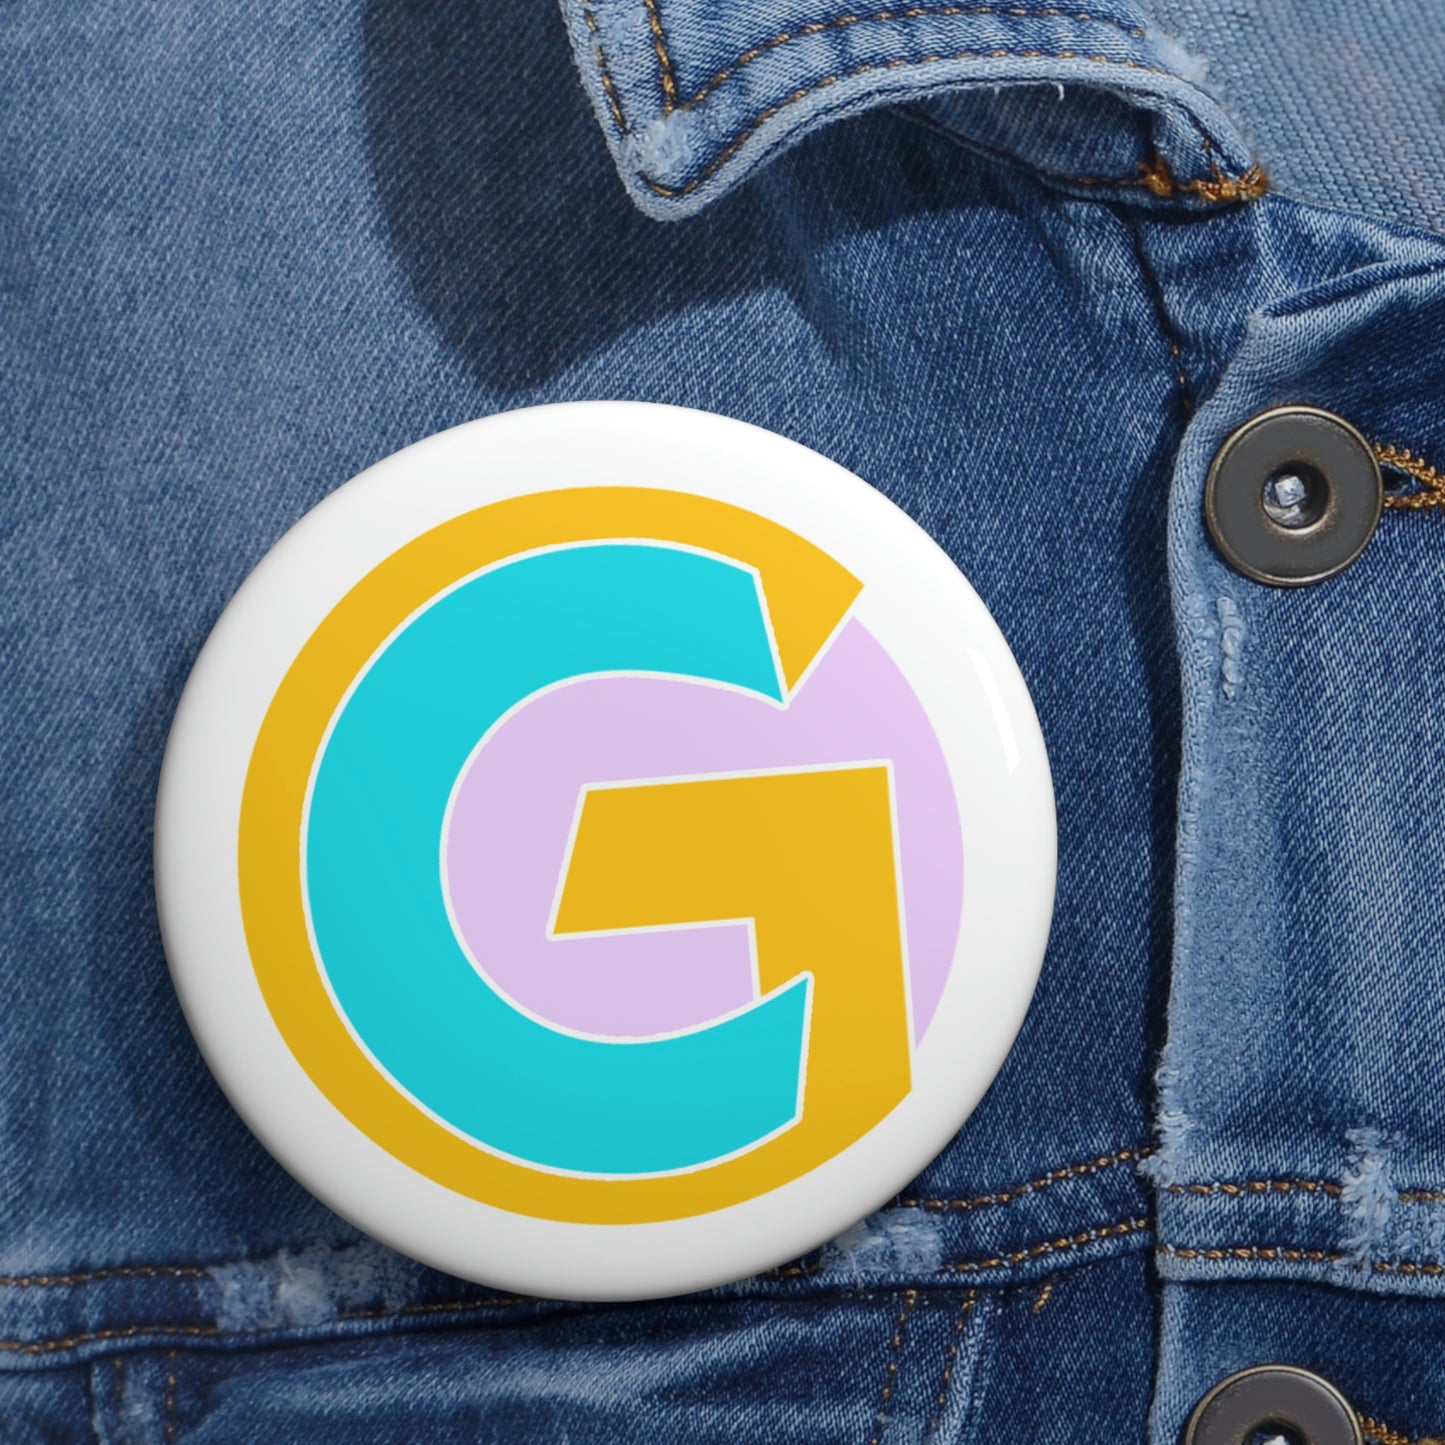 Custom Pin Buttons (GC LOGO) 3 sizes